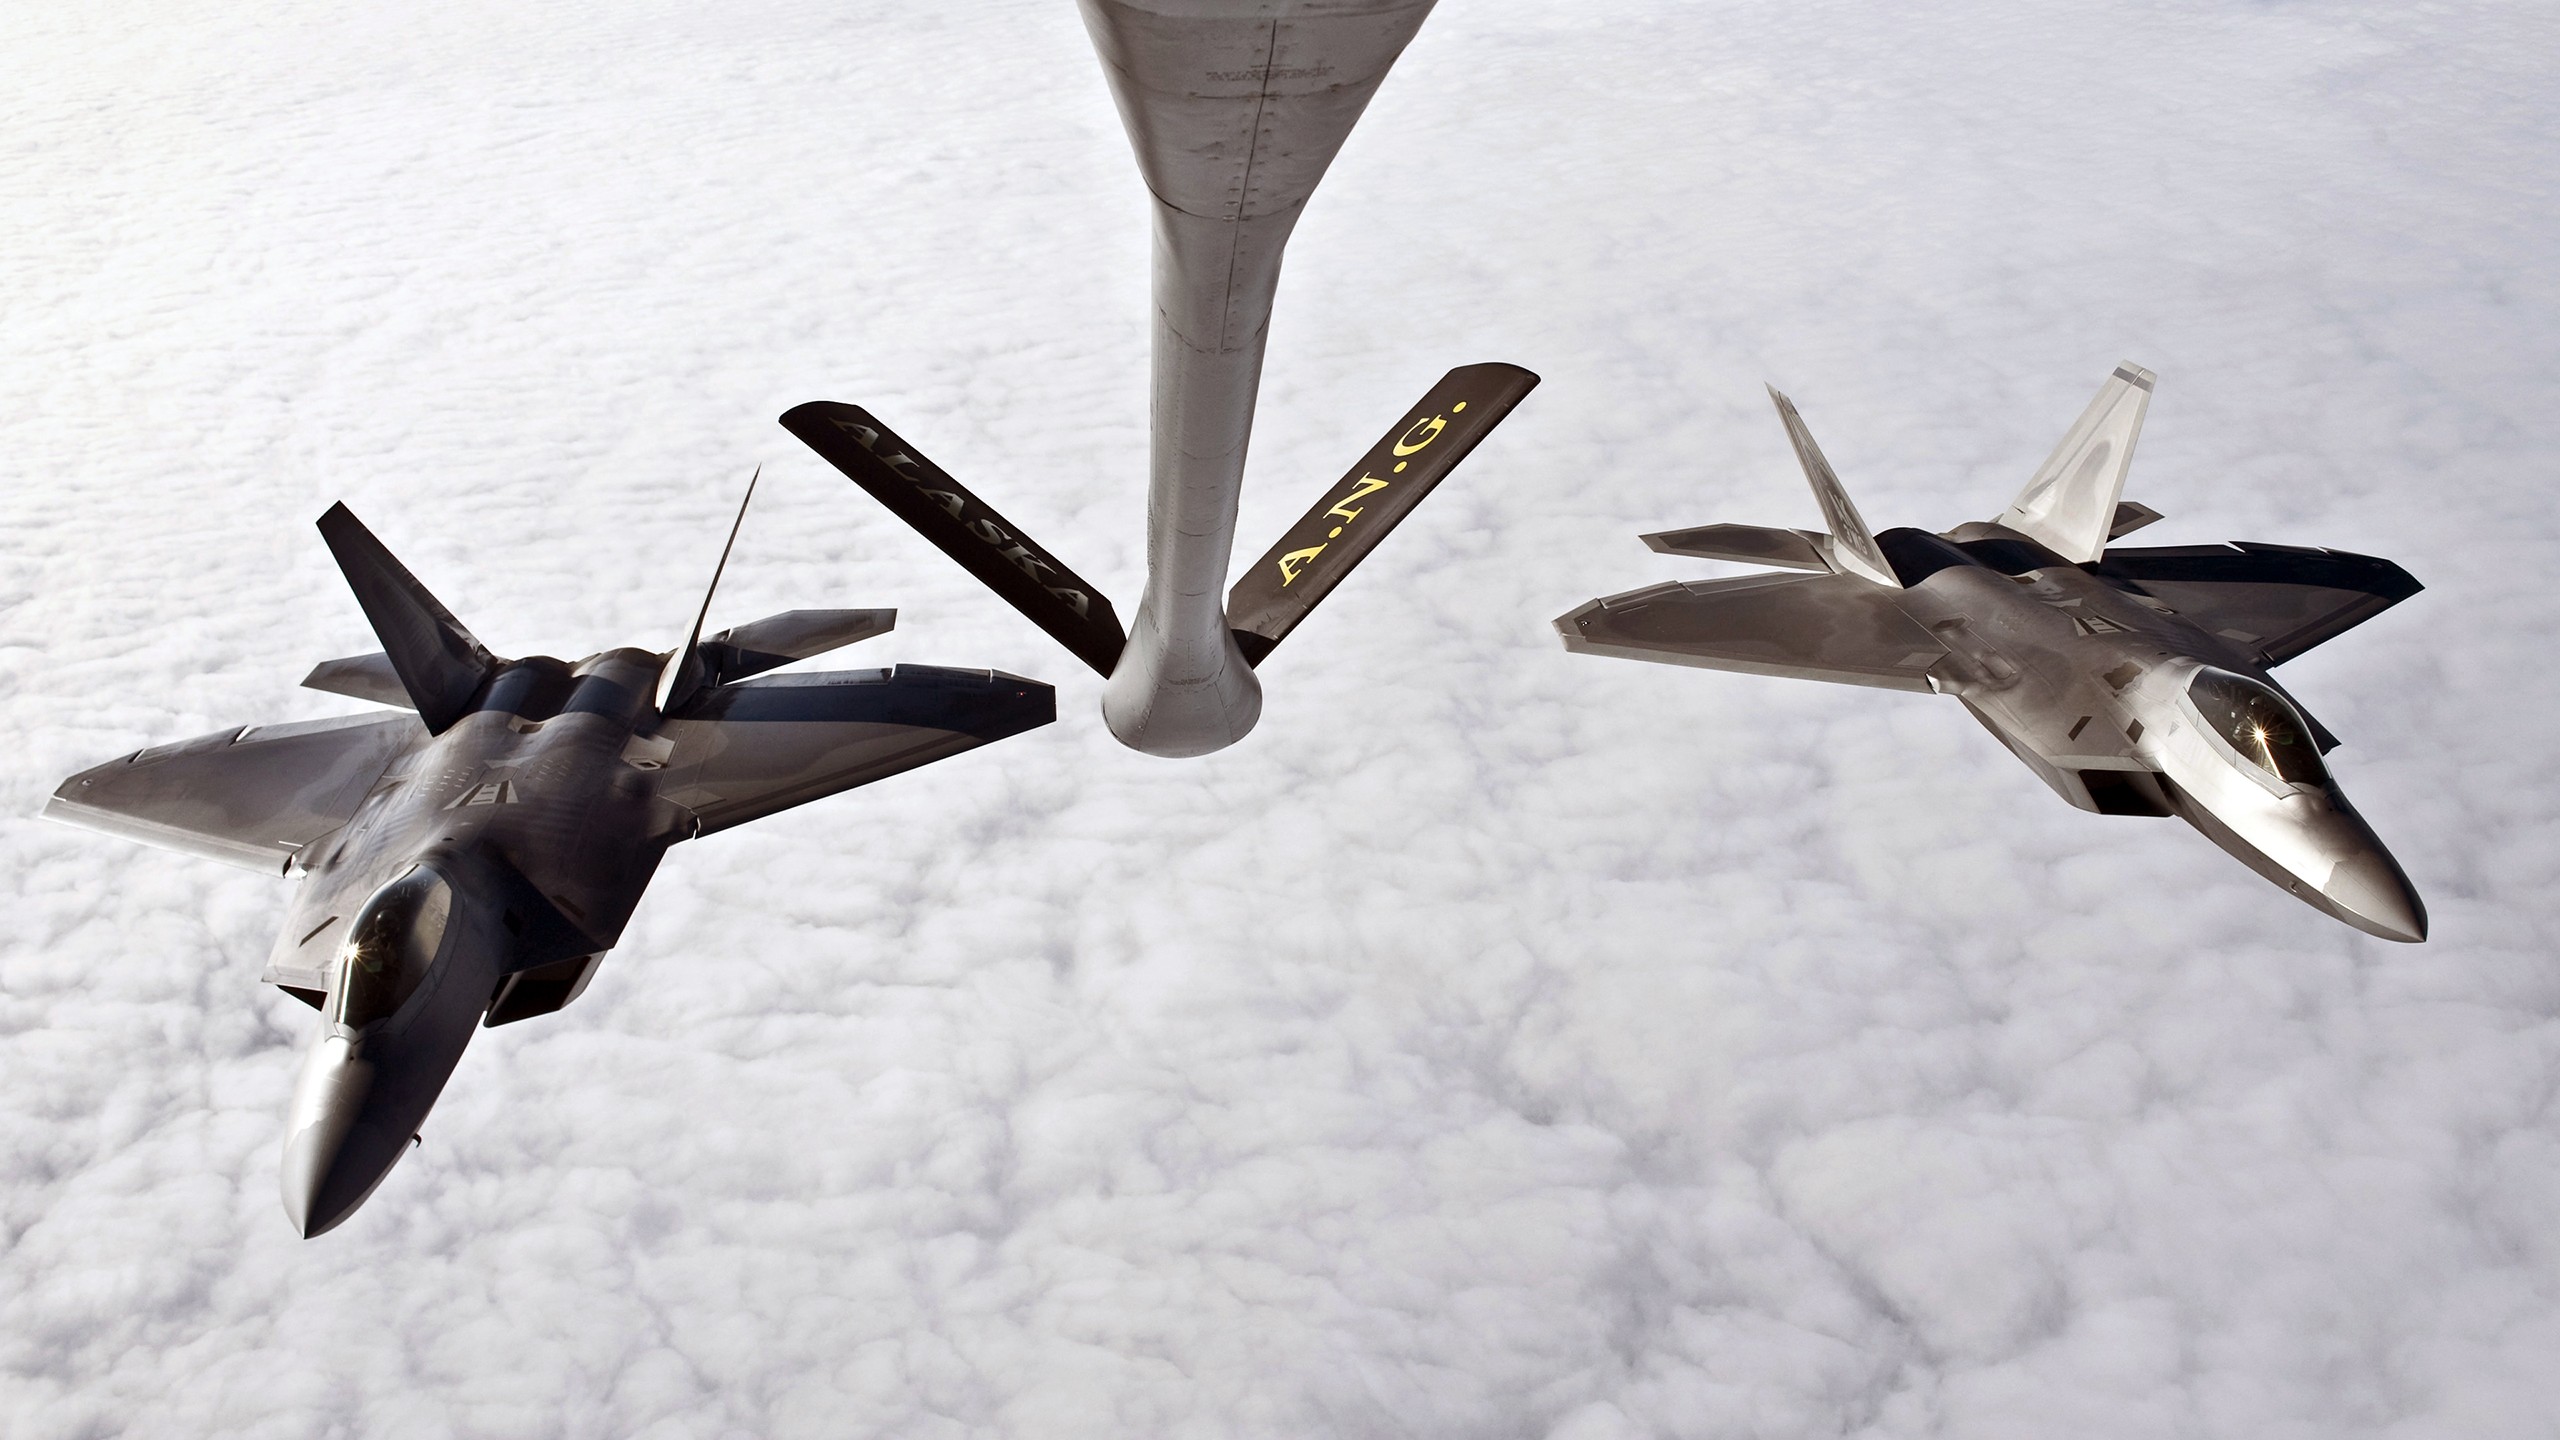 General 2560x1440 F-22 Raptor aircraft mid-air refueling military aircraft vehicle military vehicle clouds